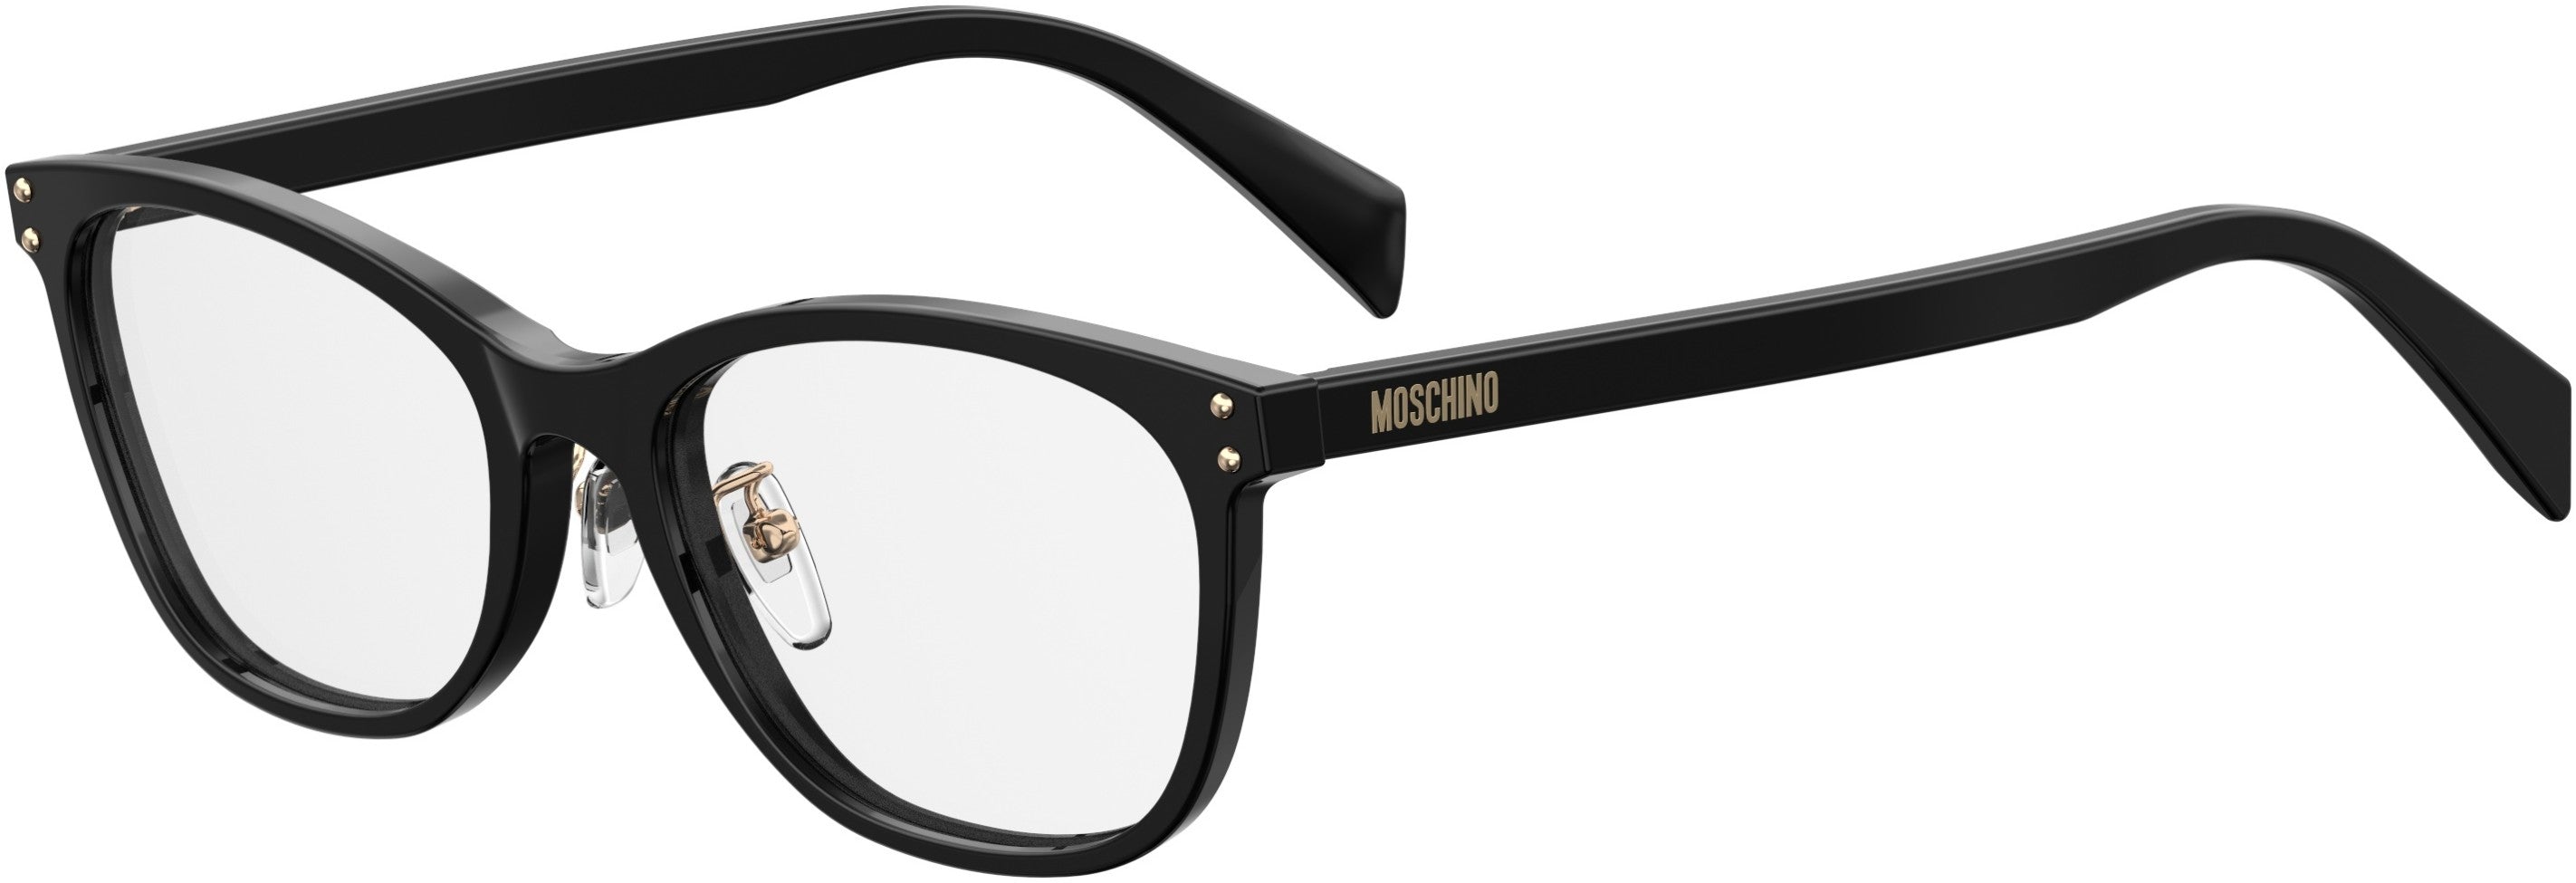  Moschino 540/F Rectangular Eyeglasses 0807-0807  Black (00 Demo Lens)